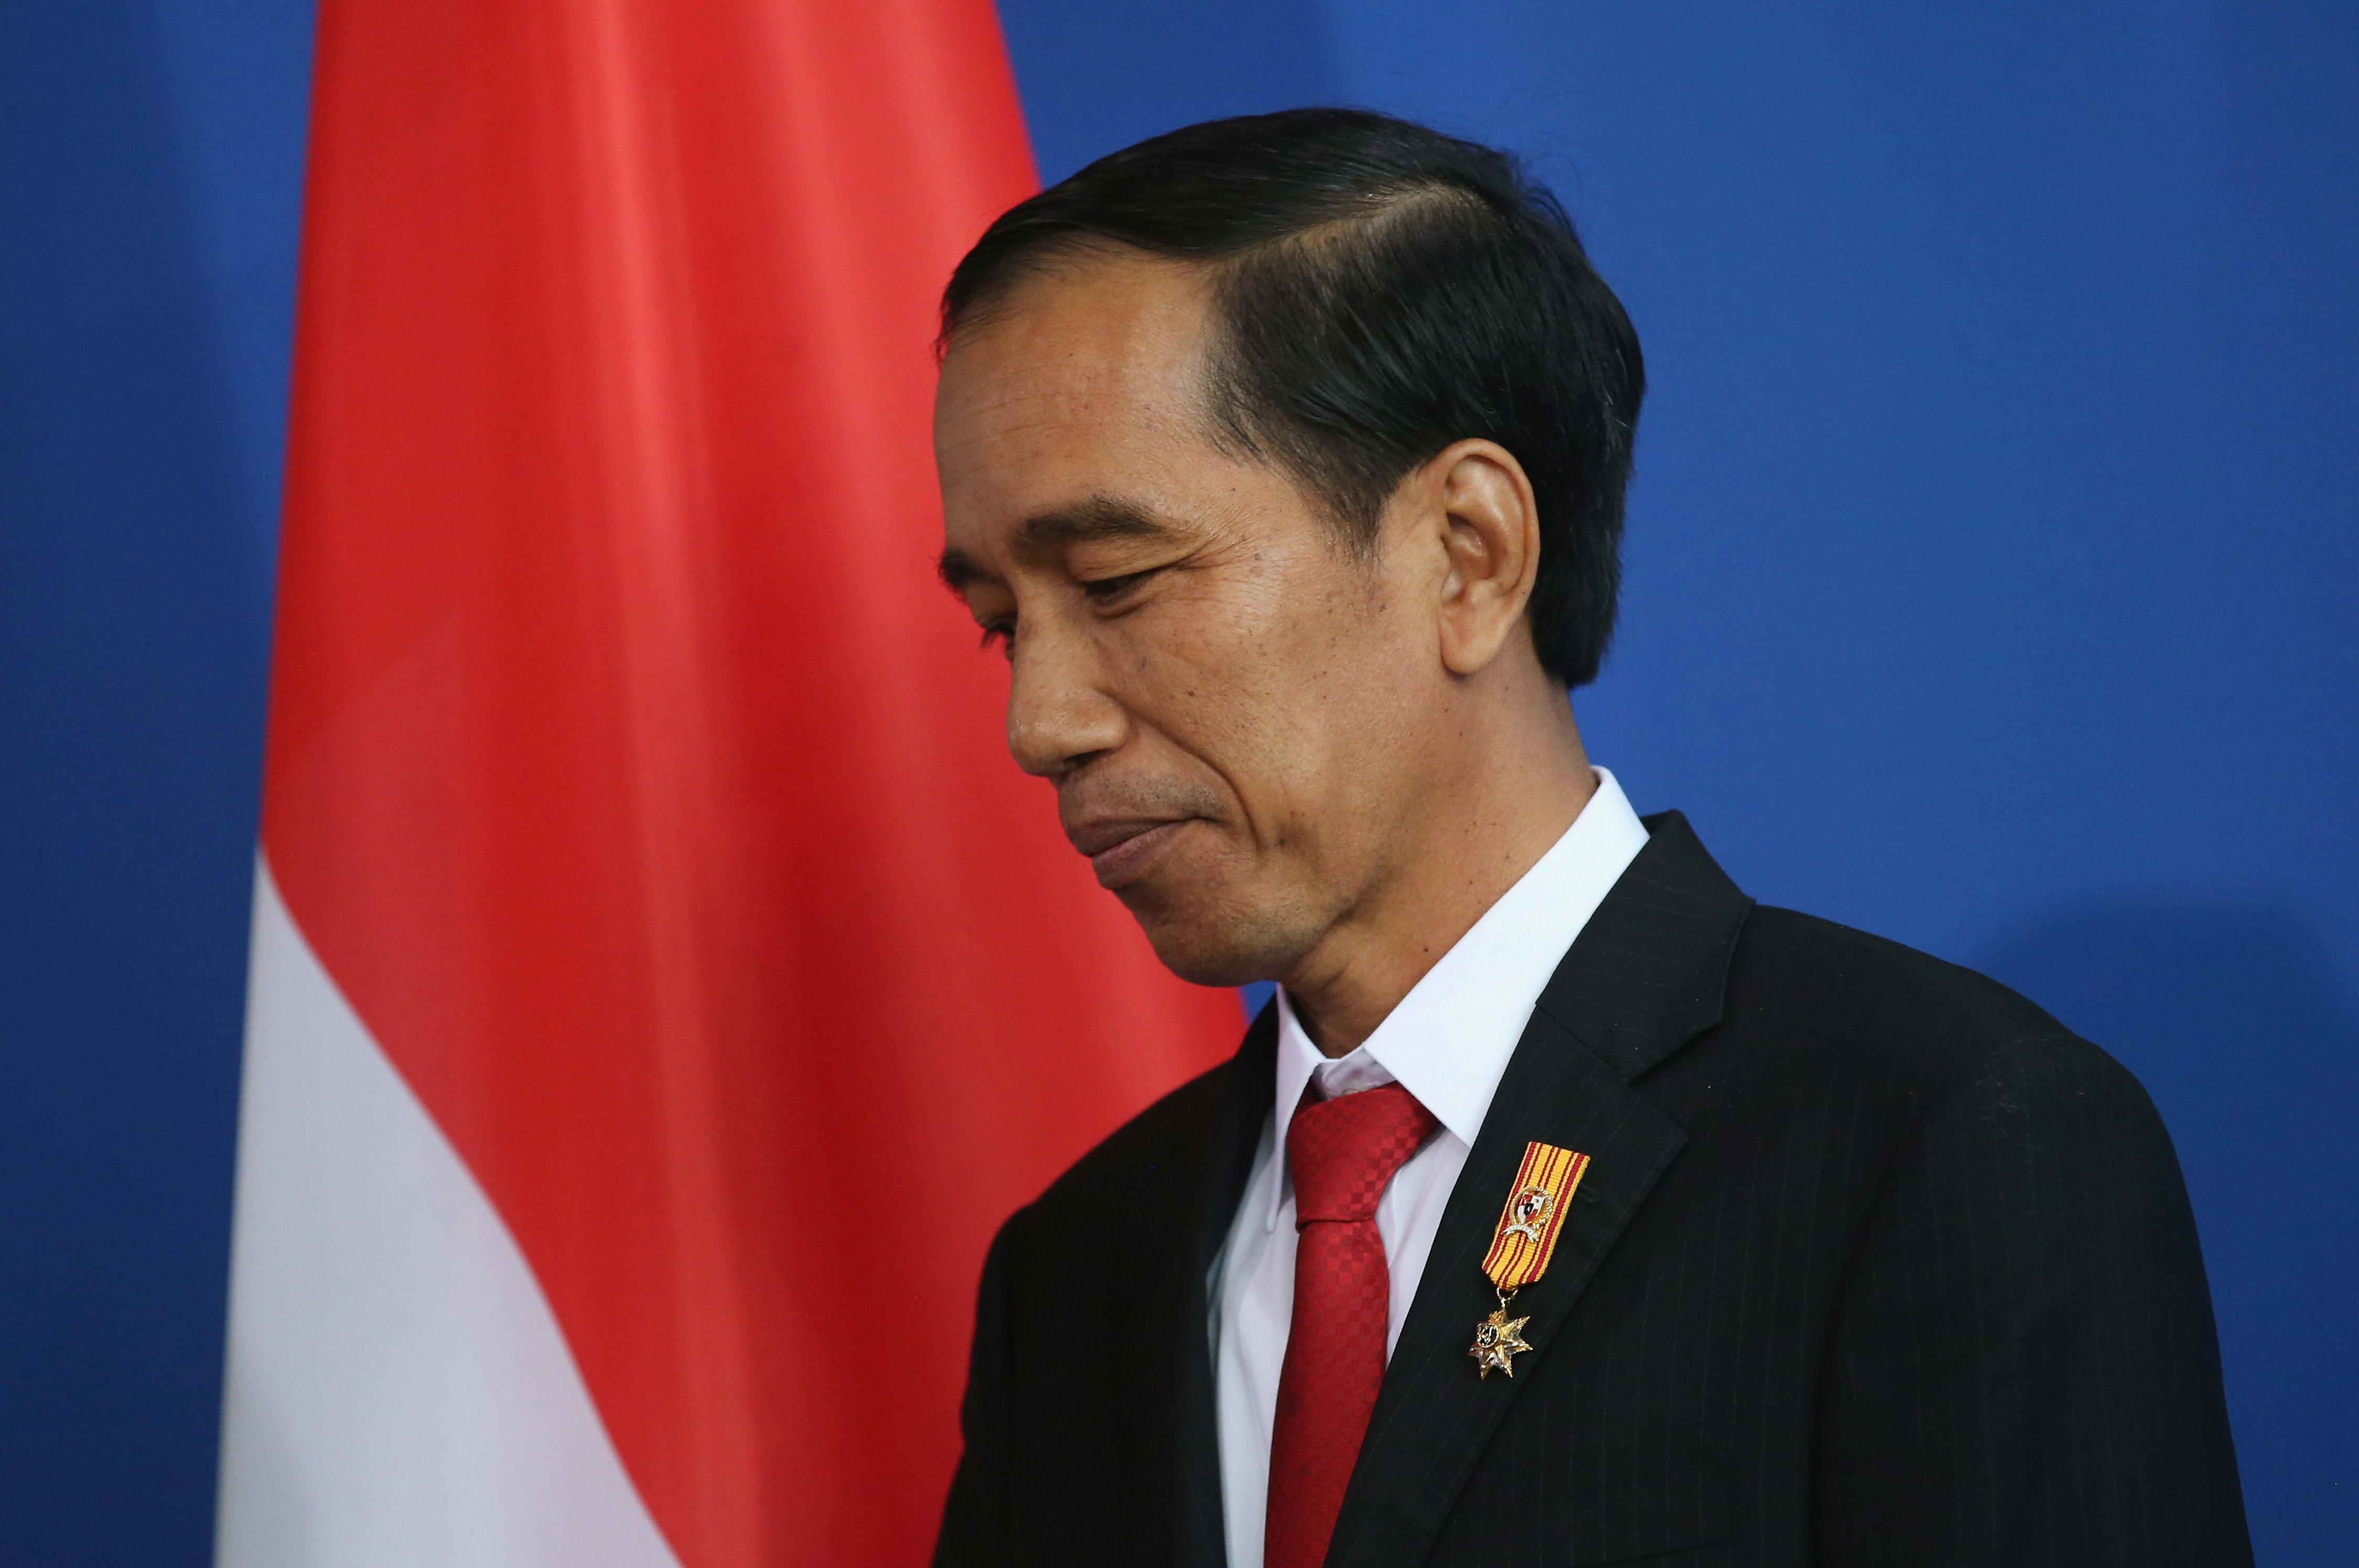 Indonesian President Jokowi celebrates 2 years in office